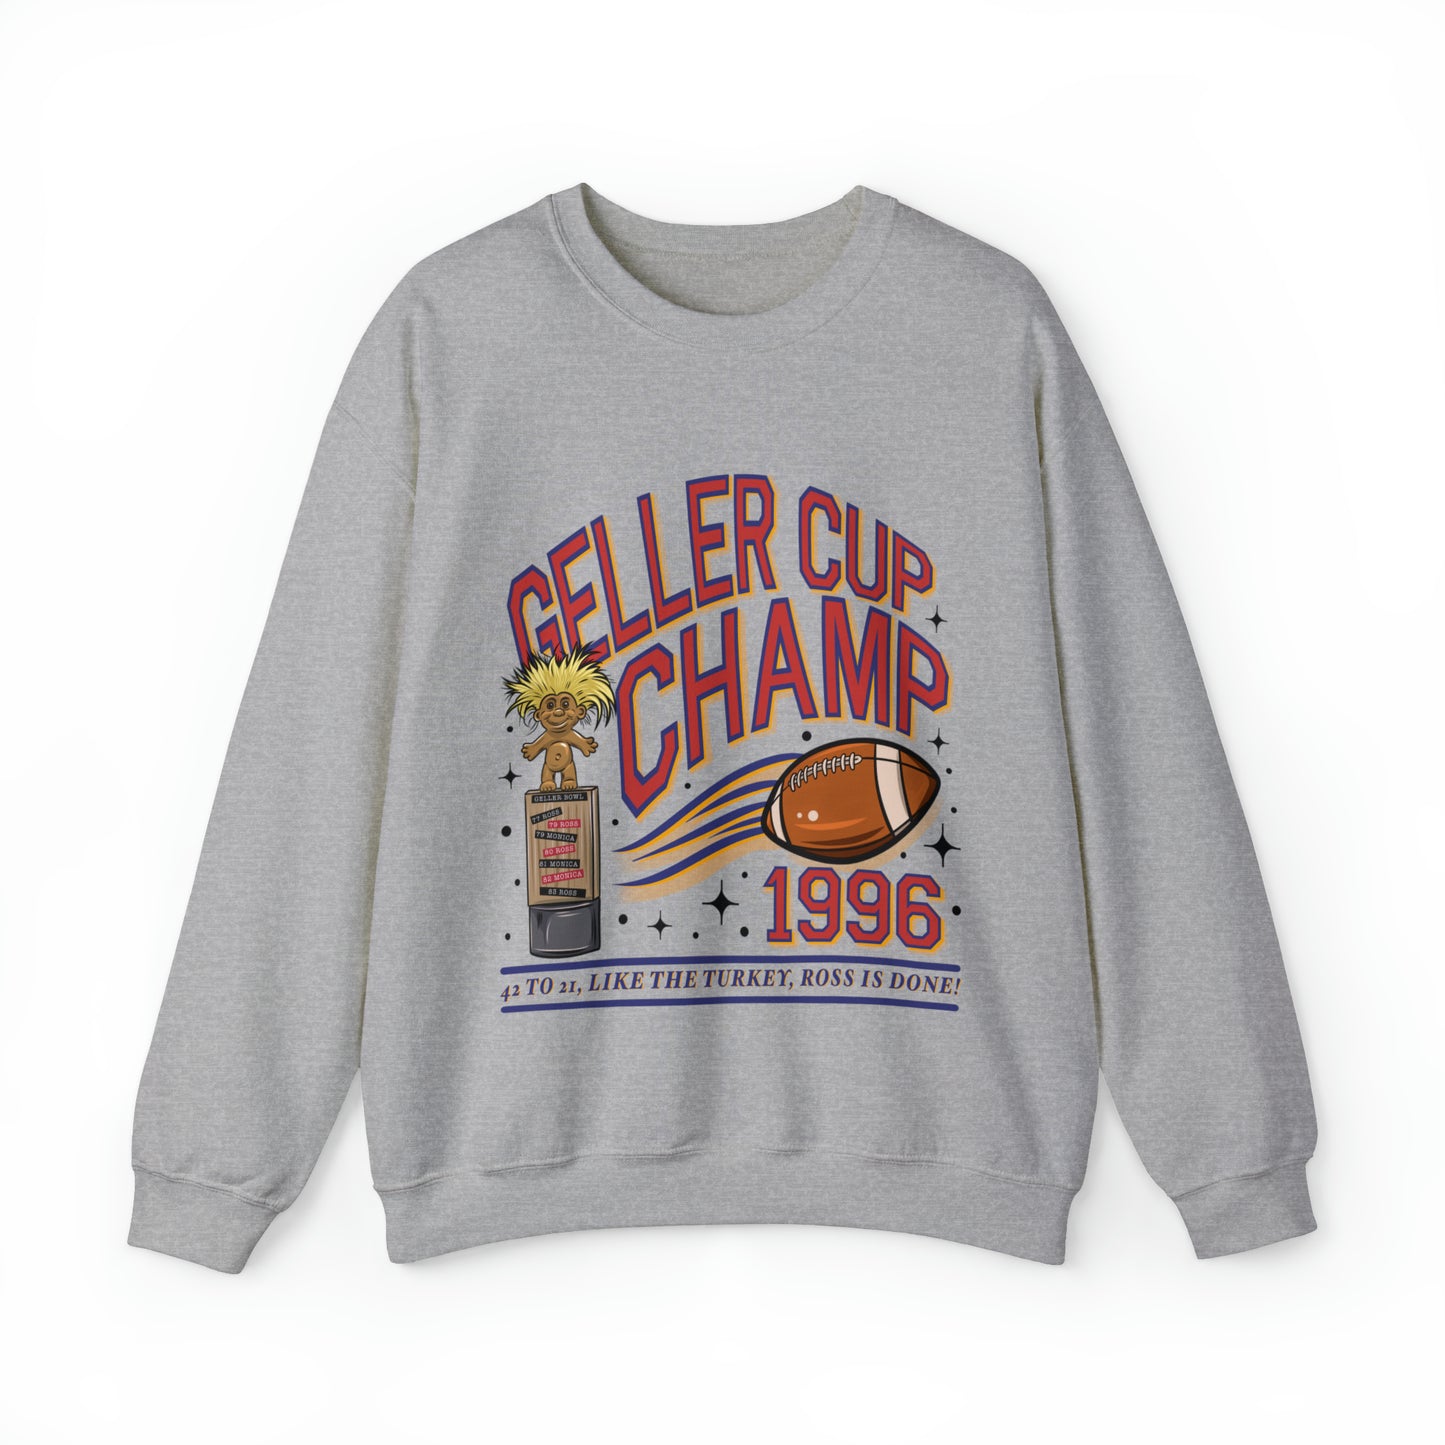 Geller Bowl Friendsgiving Sweatshirt